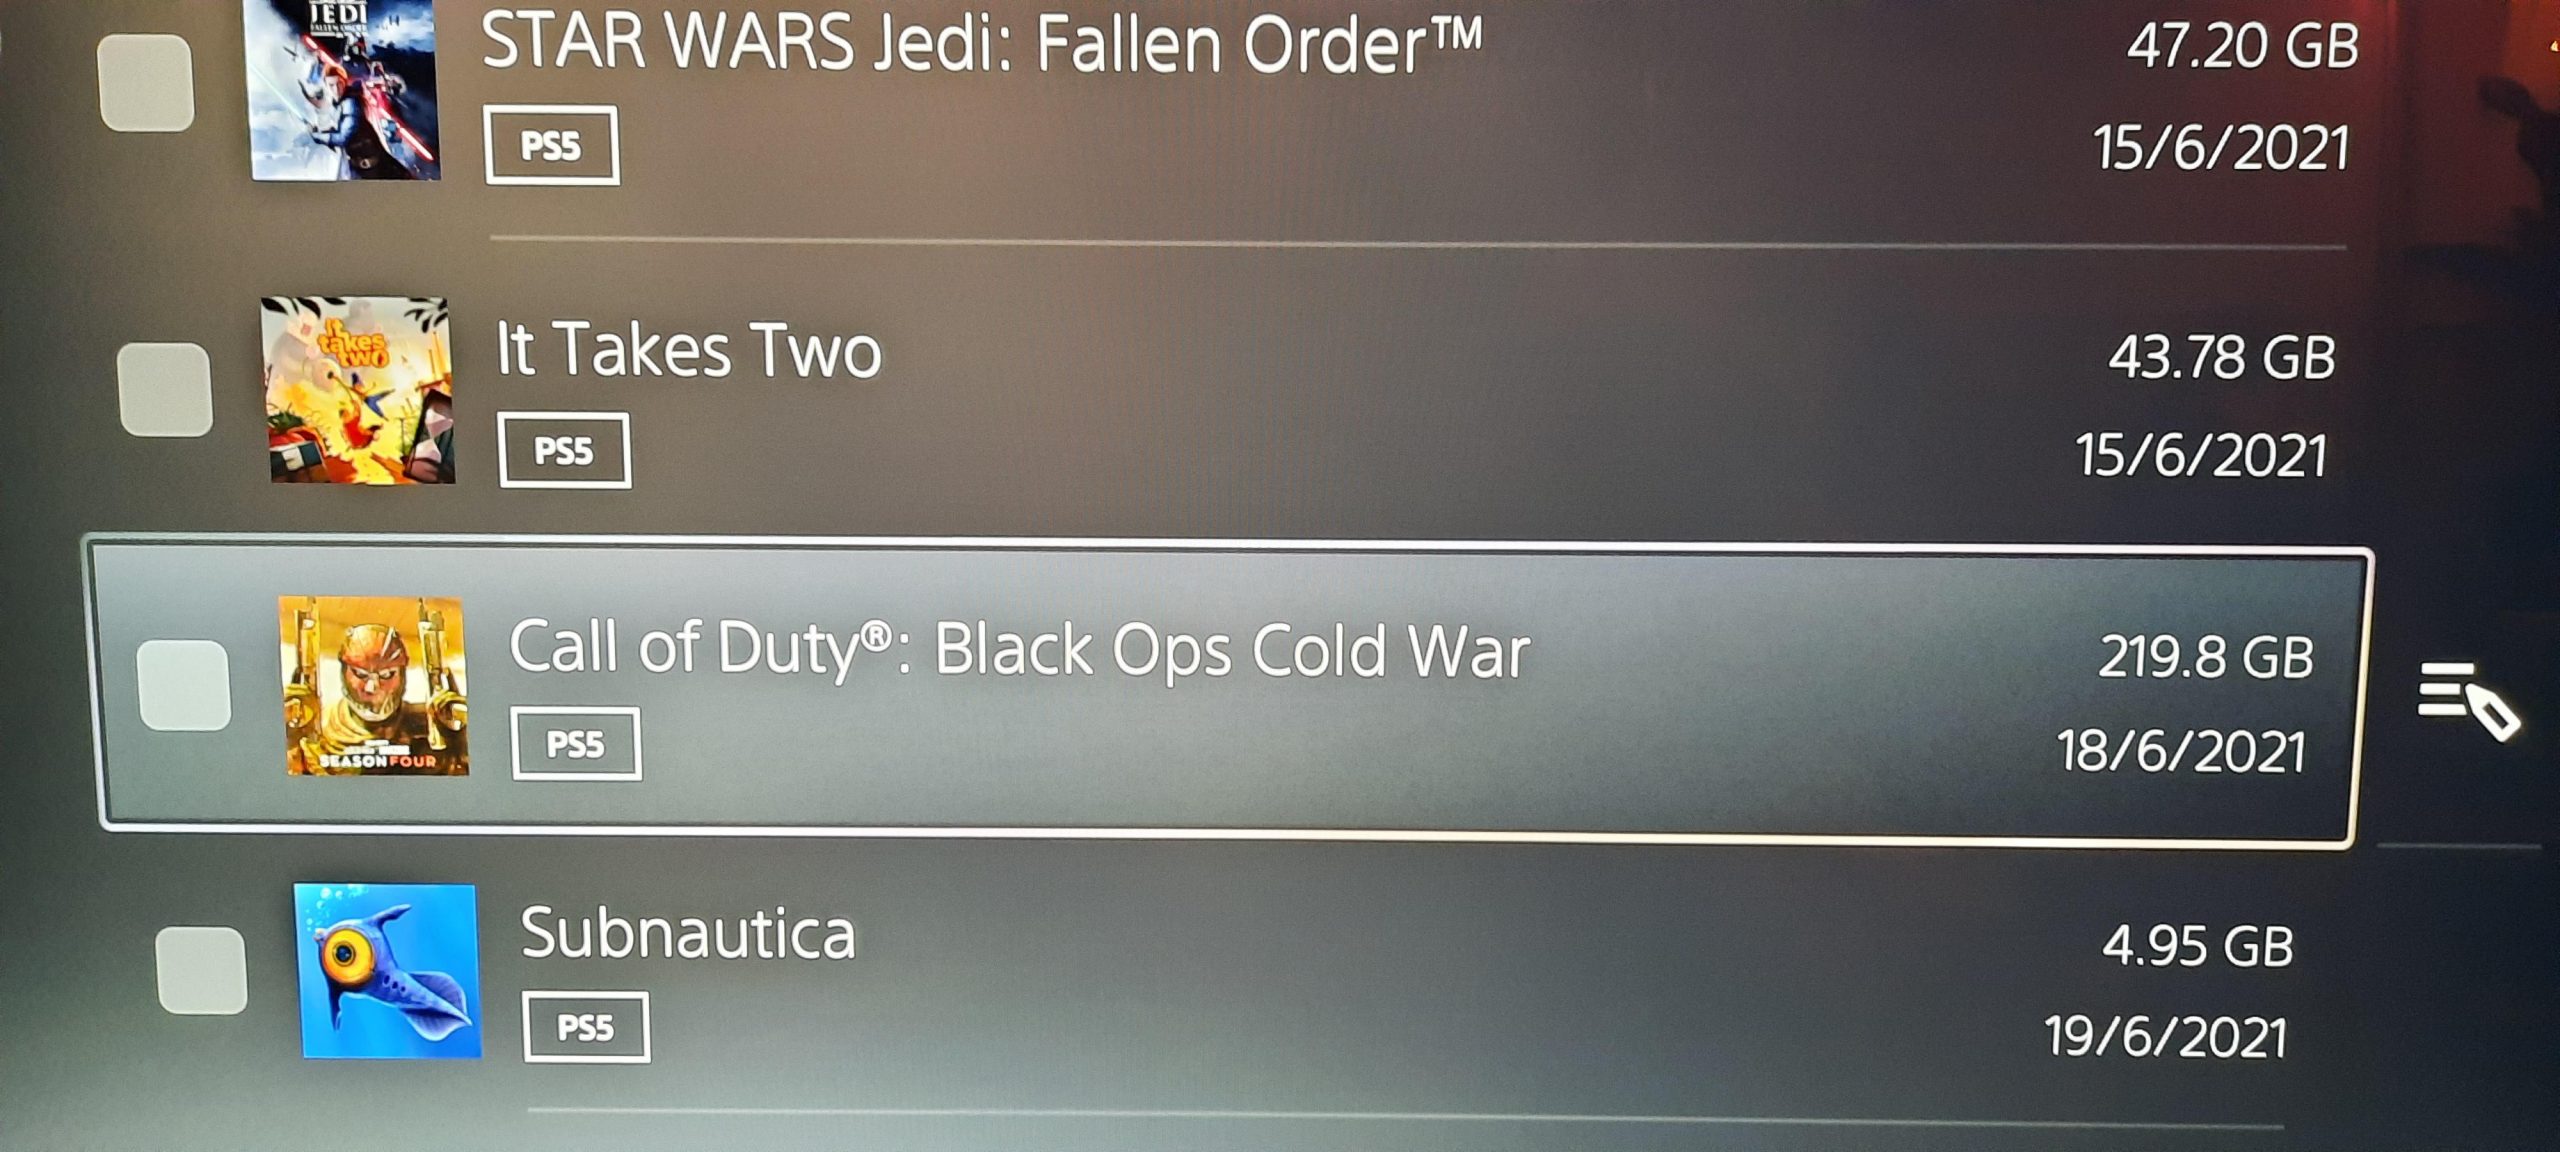 I-Call of Duty Black Ops Cold War manje isingaphezu kuka-200 GB kuma-Consoles